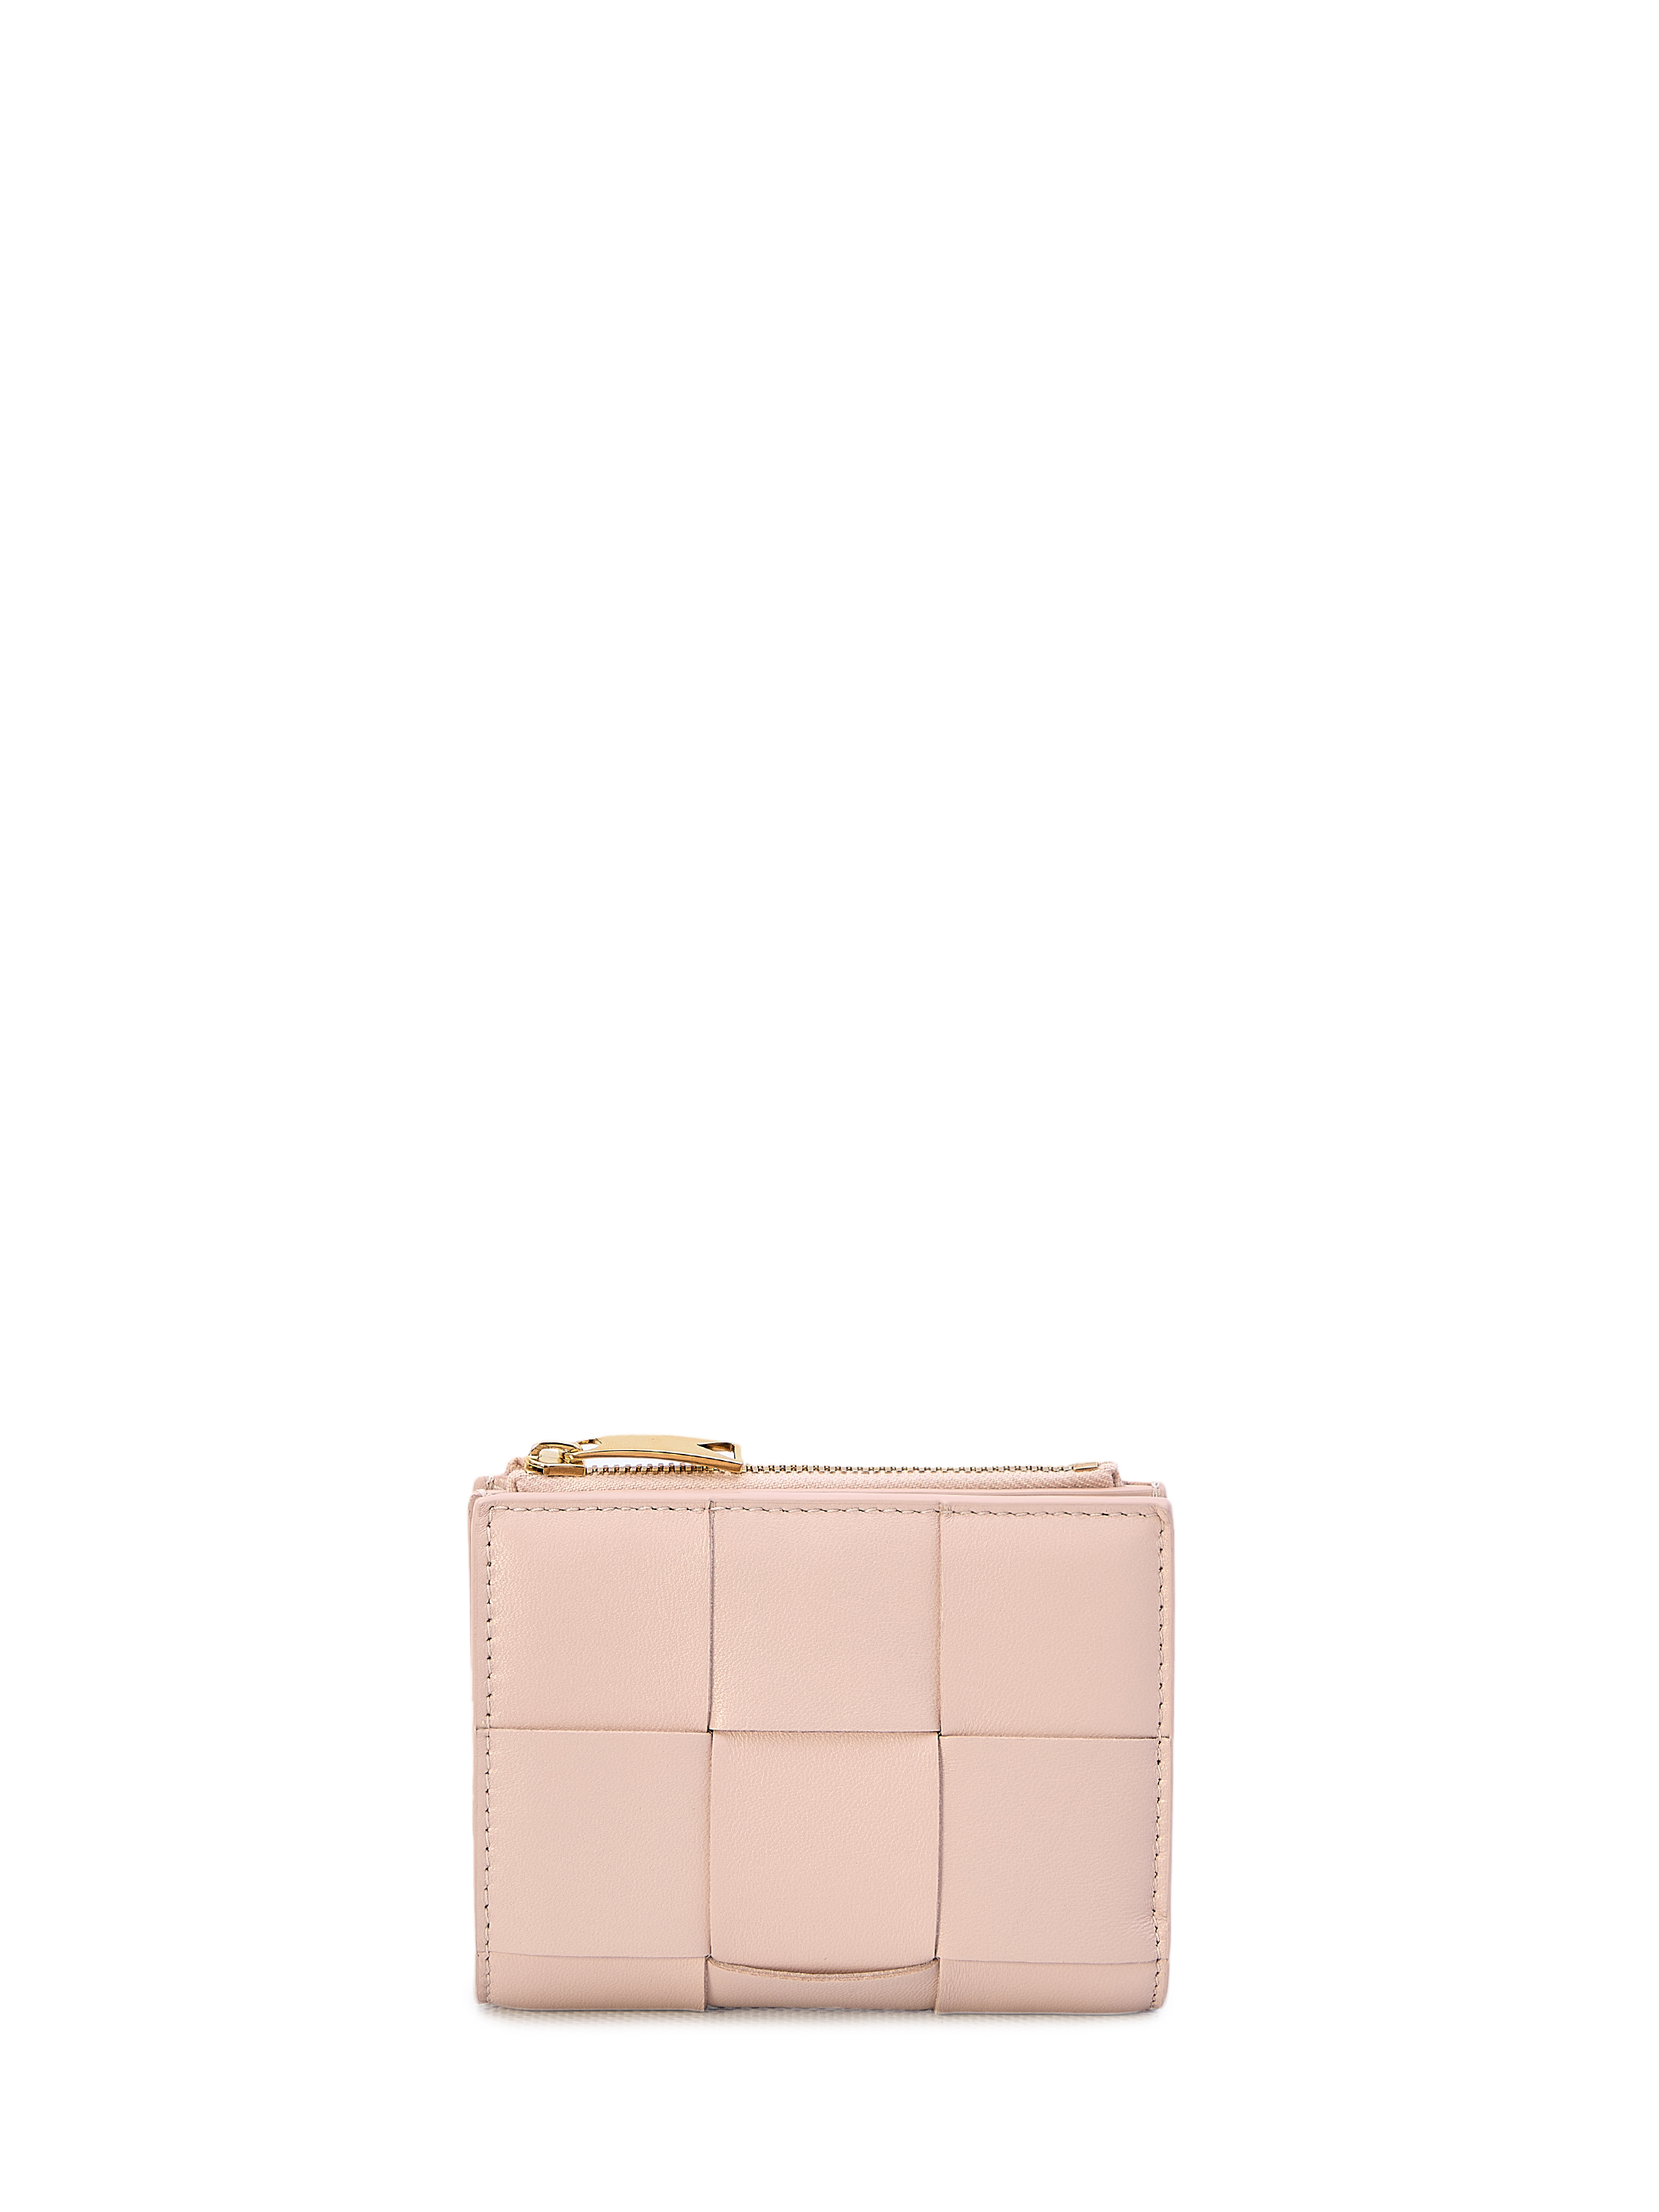 Кошелек Bottega Veneta Leather, розовый кошелек бренд ко на магните на молнии отделение для монет розовый